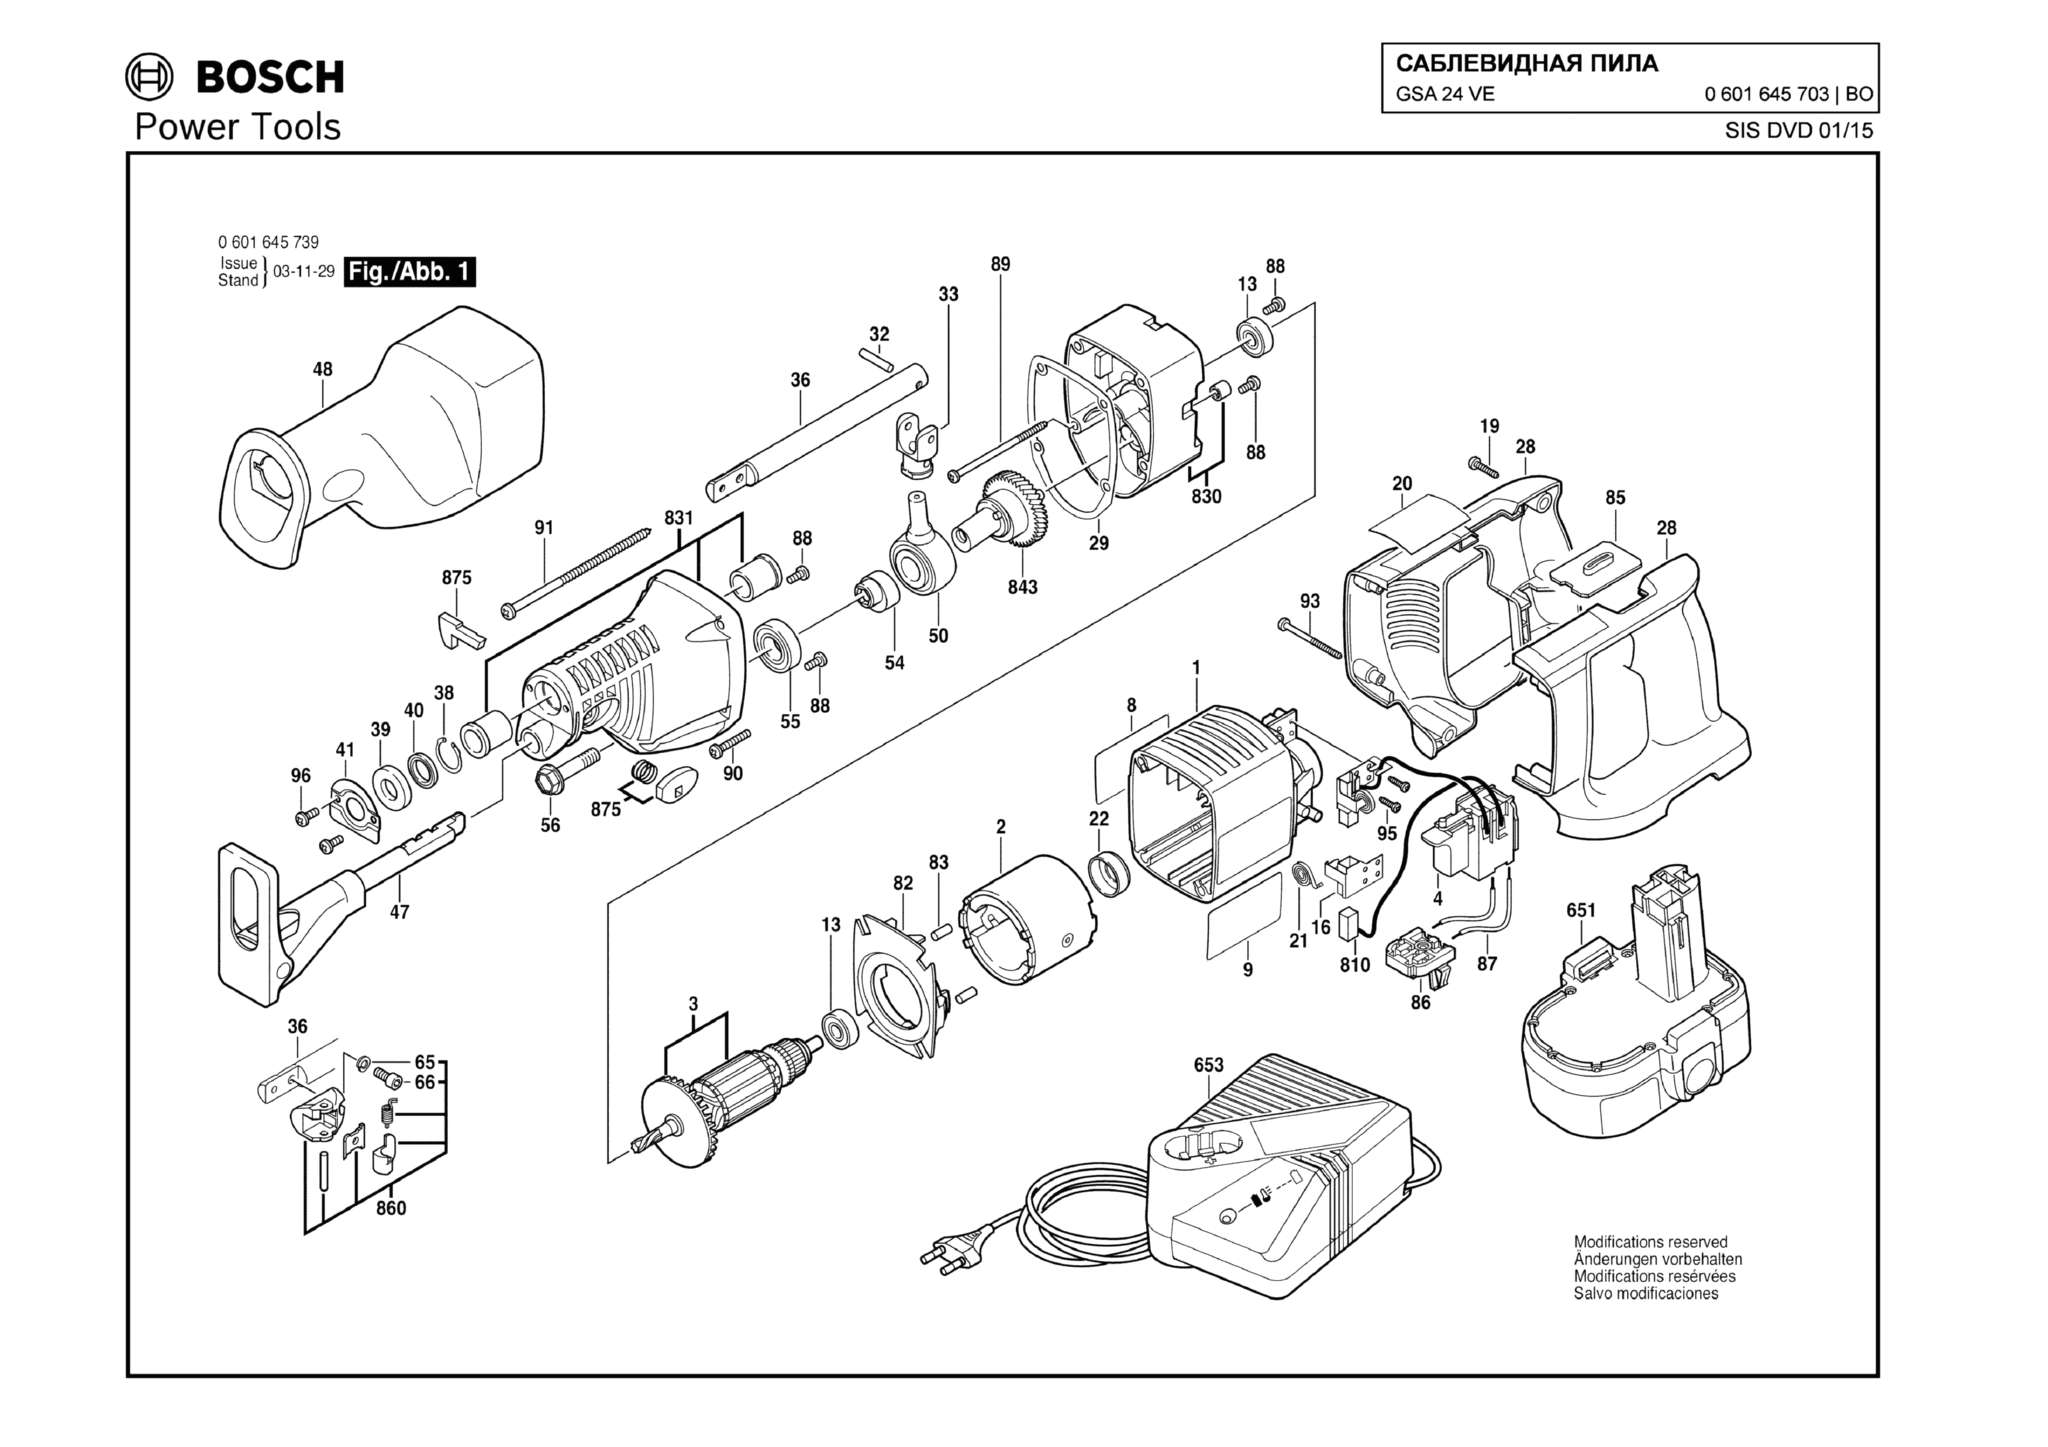 Запчасти, схема и деталировка Bosch GSA 24 VE (ТИП 0601645703)